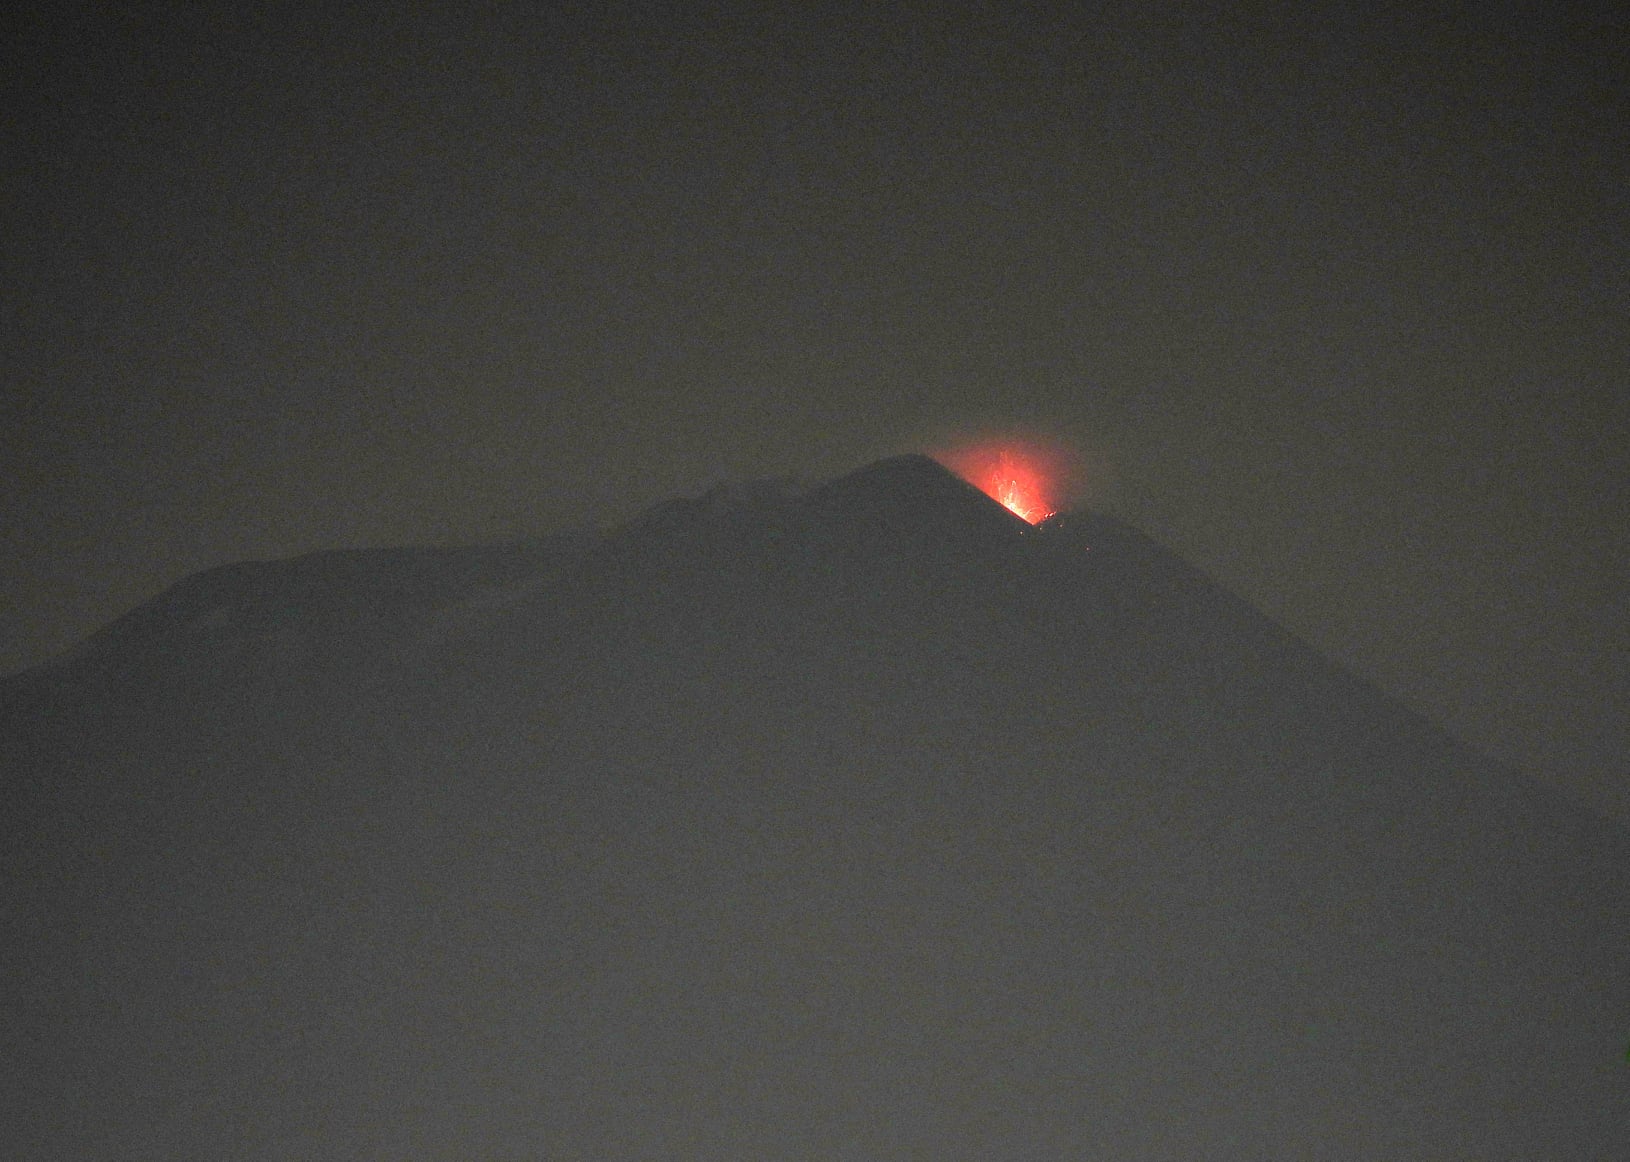 Weak strombolian eruption at Etna's New SE crater last evening (image: Boris Behncke / facebook.com/boris.behncke)